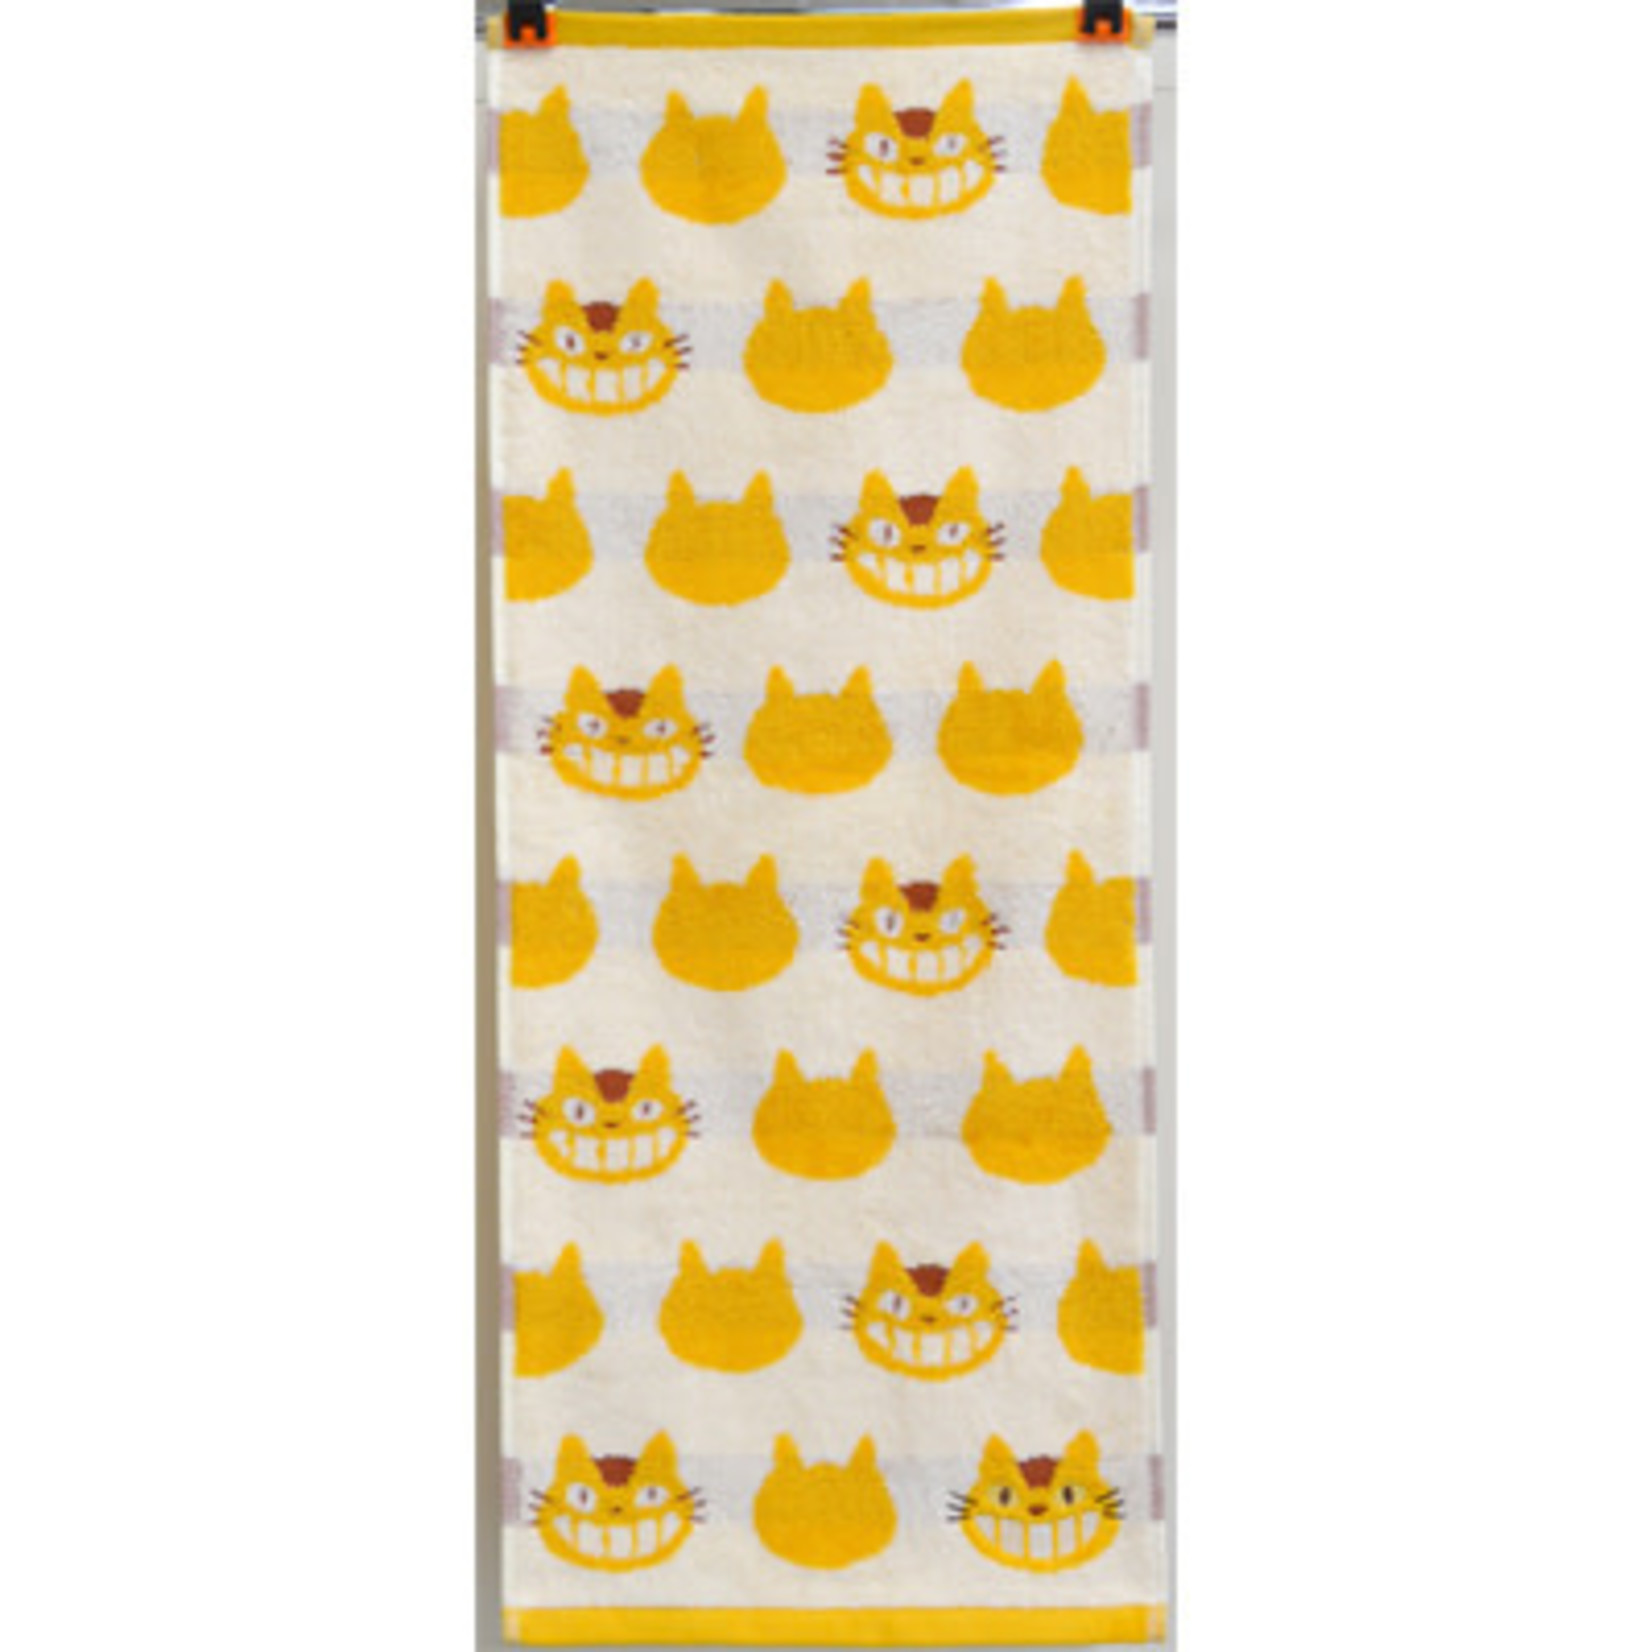 Marushin Totoro - Ninmari Neko (cat bus) Towel